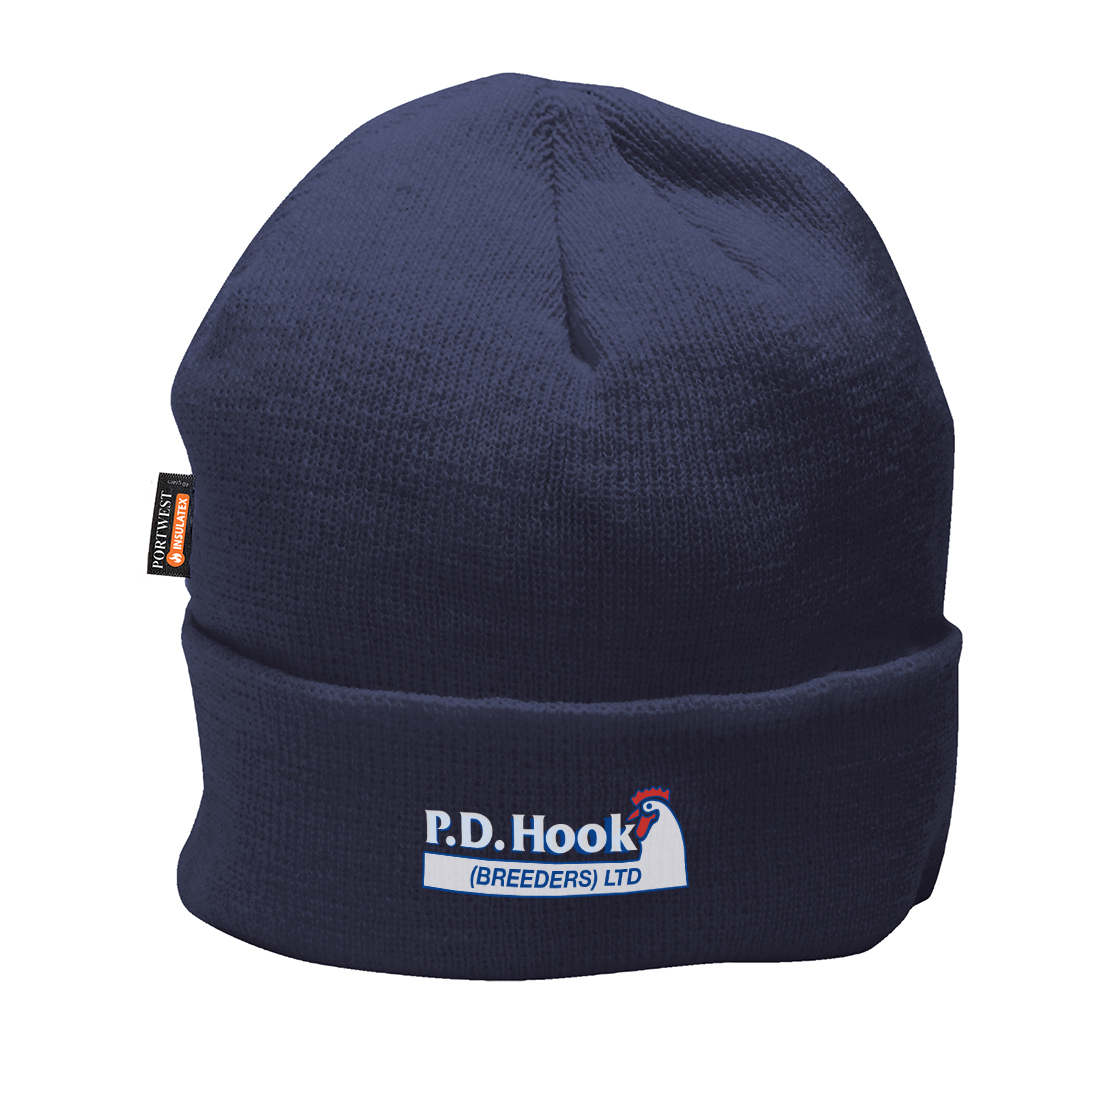 P D Hook (Breeders) Ltd - Beanie Hat, Navy, Embroidered